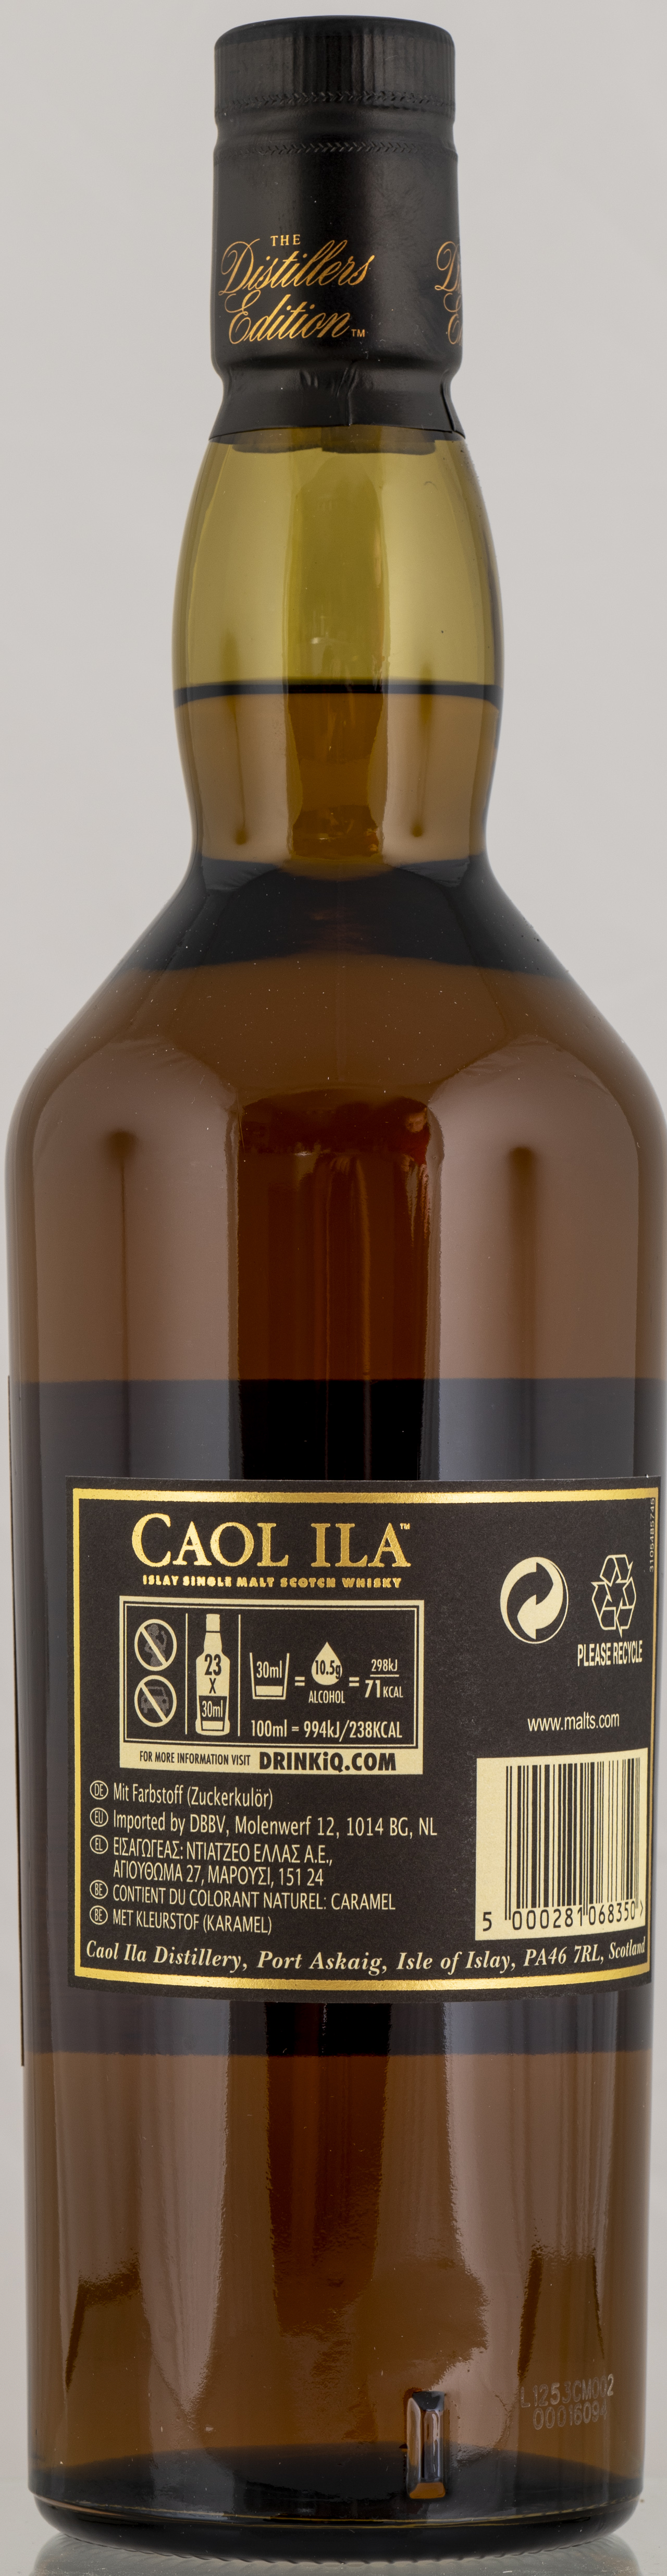 Billede: PHC_7303 - Caol Ila Distillers Edition 2009-2021 C-si 8-481 - bottle back.jpg